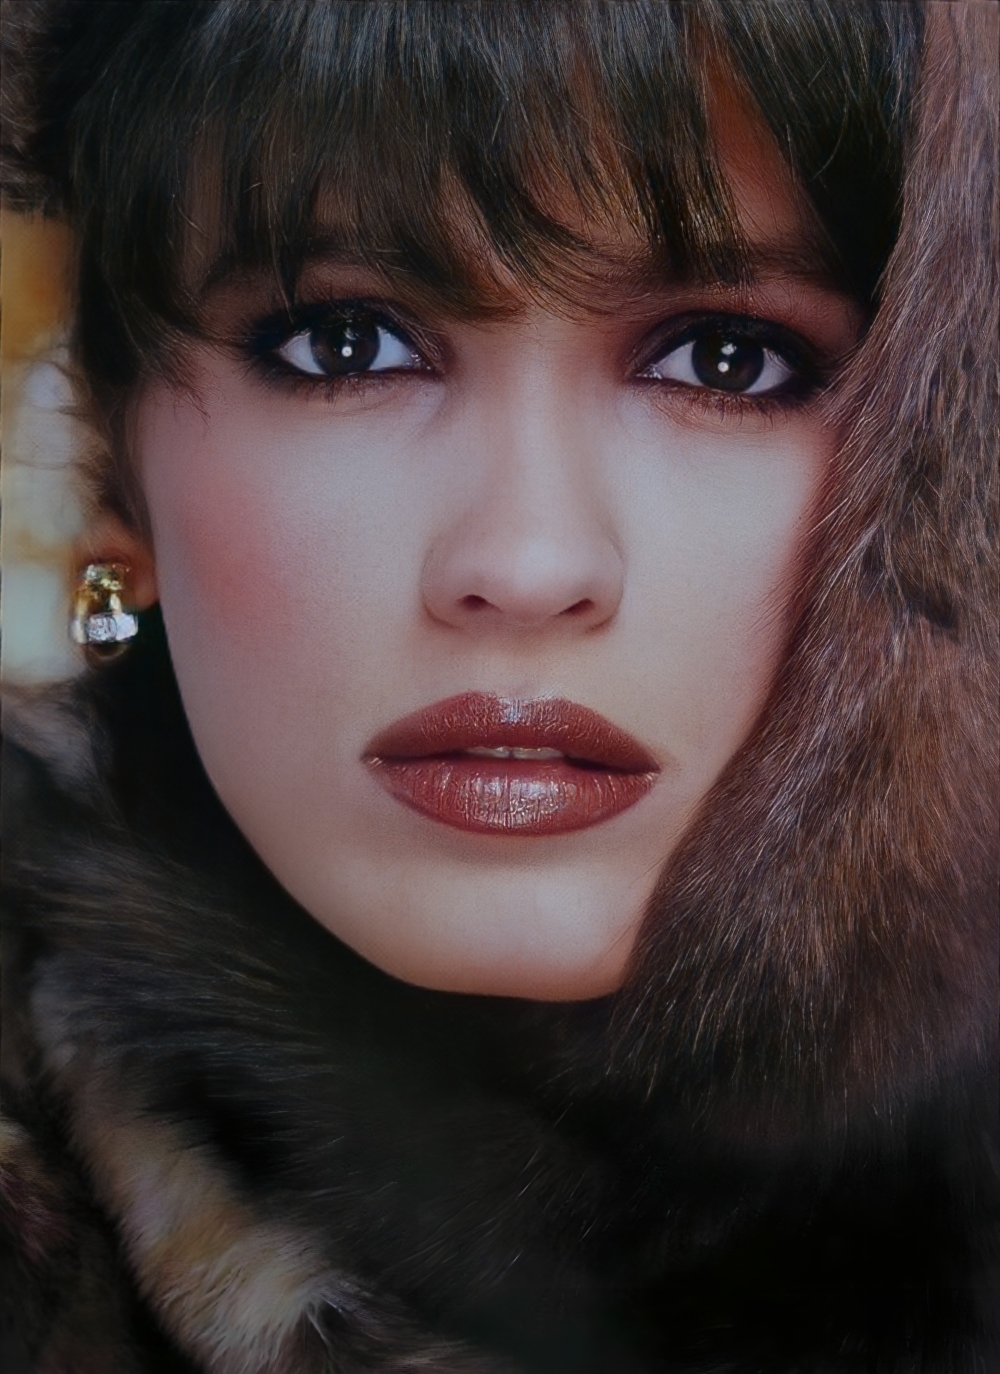 Gia Carangi photographed by Albert Watson. Hair by Raymond Camacho. Makeup by Fran Cooper. Vogue Deutsch December 1983. New York City shoot.